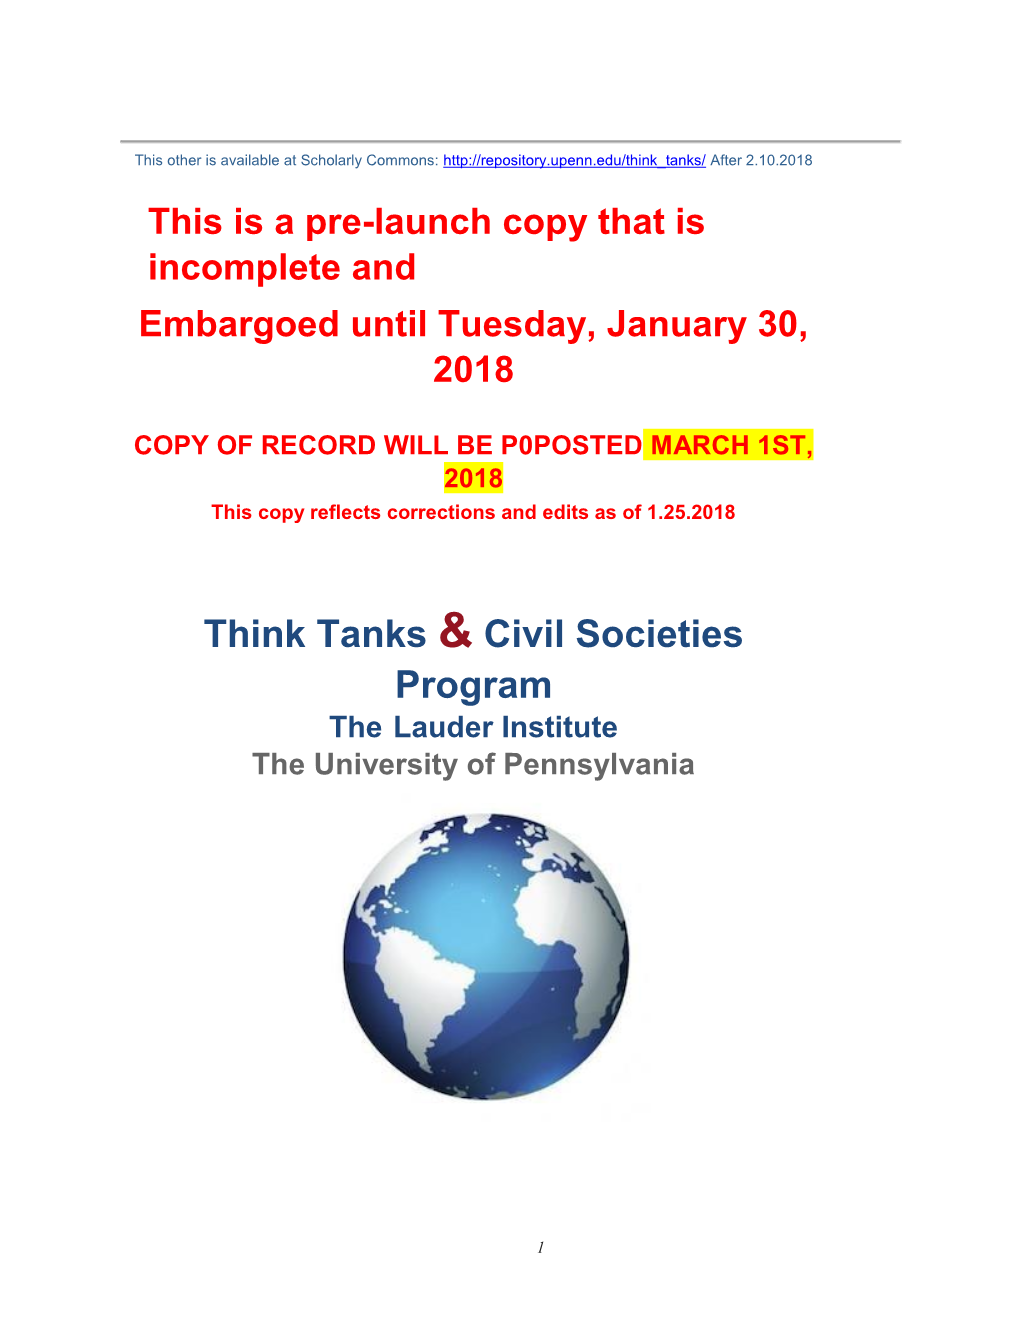 Think Tanks & Civil Societies Program